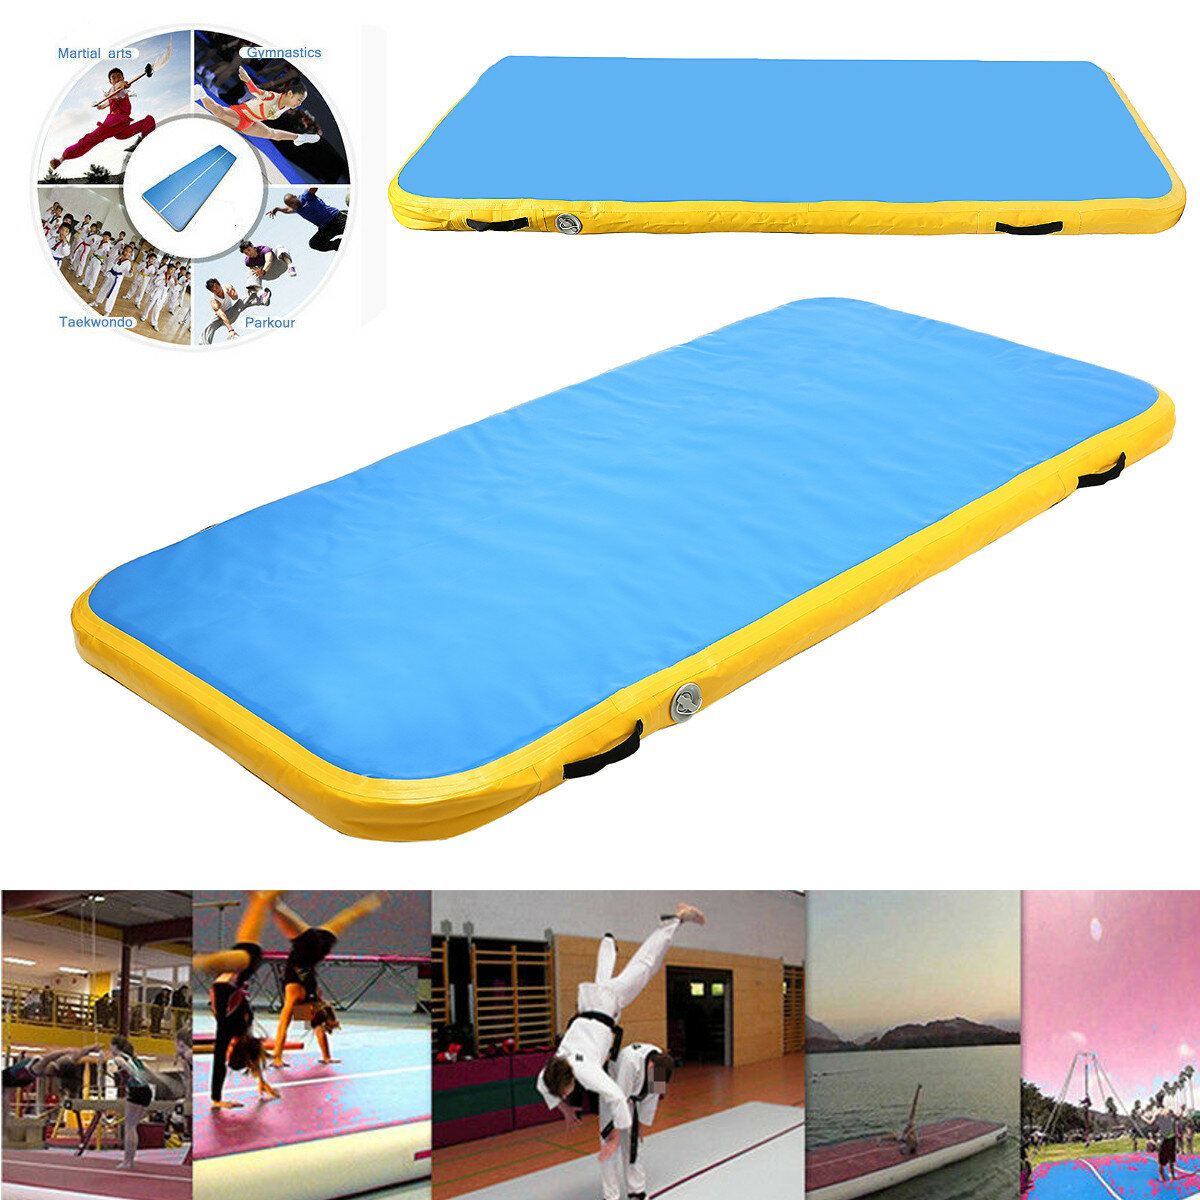 Hot Sale Air Tumbling Track Gymnastics Cheerleading Inflatable Mat